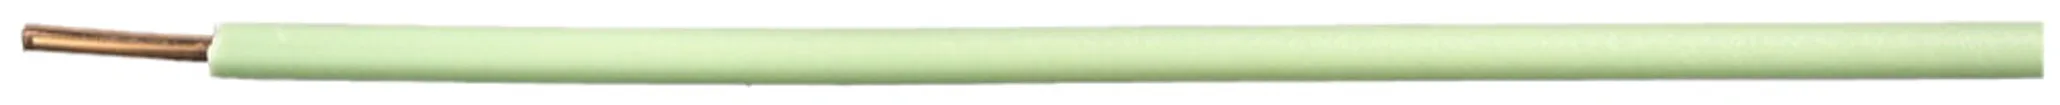 Fil N H07Z1-U sans halogène 1.5mm² 450/750V vert clair Cca 